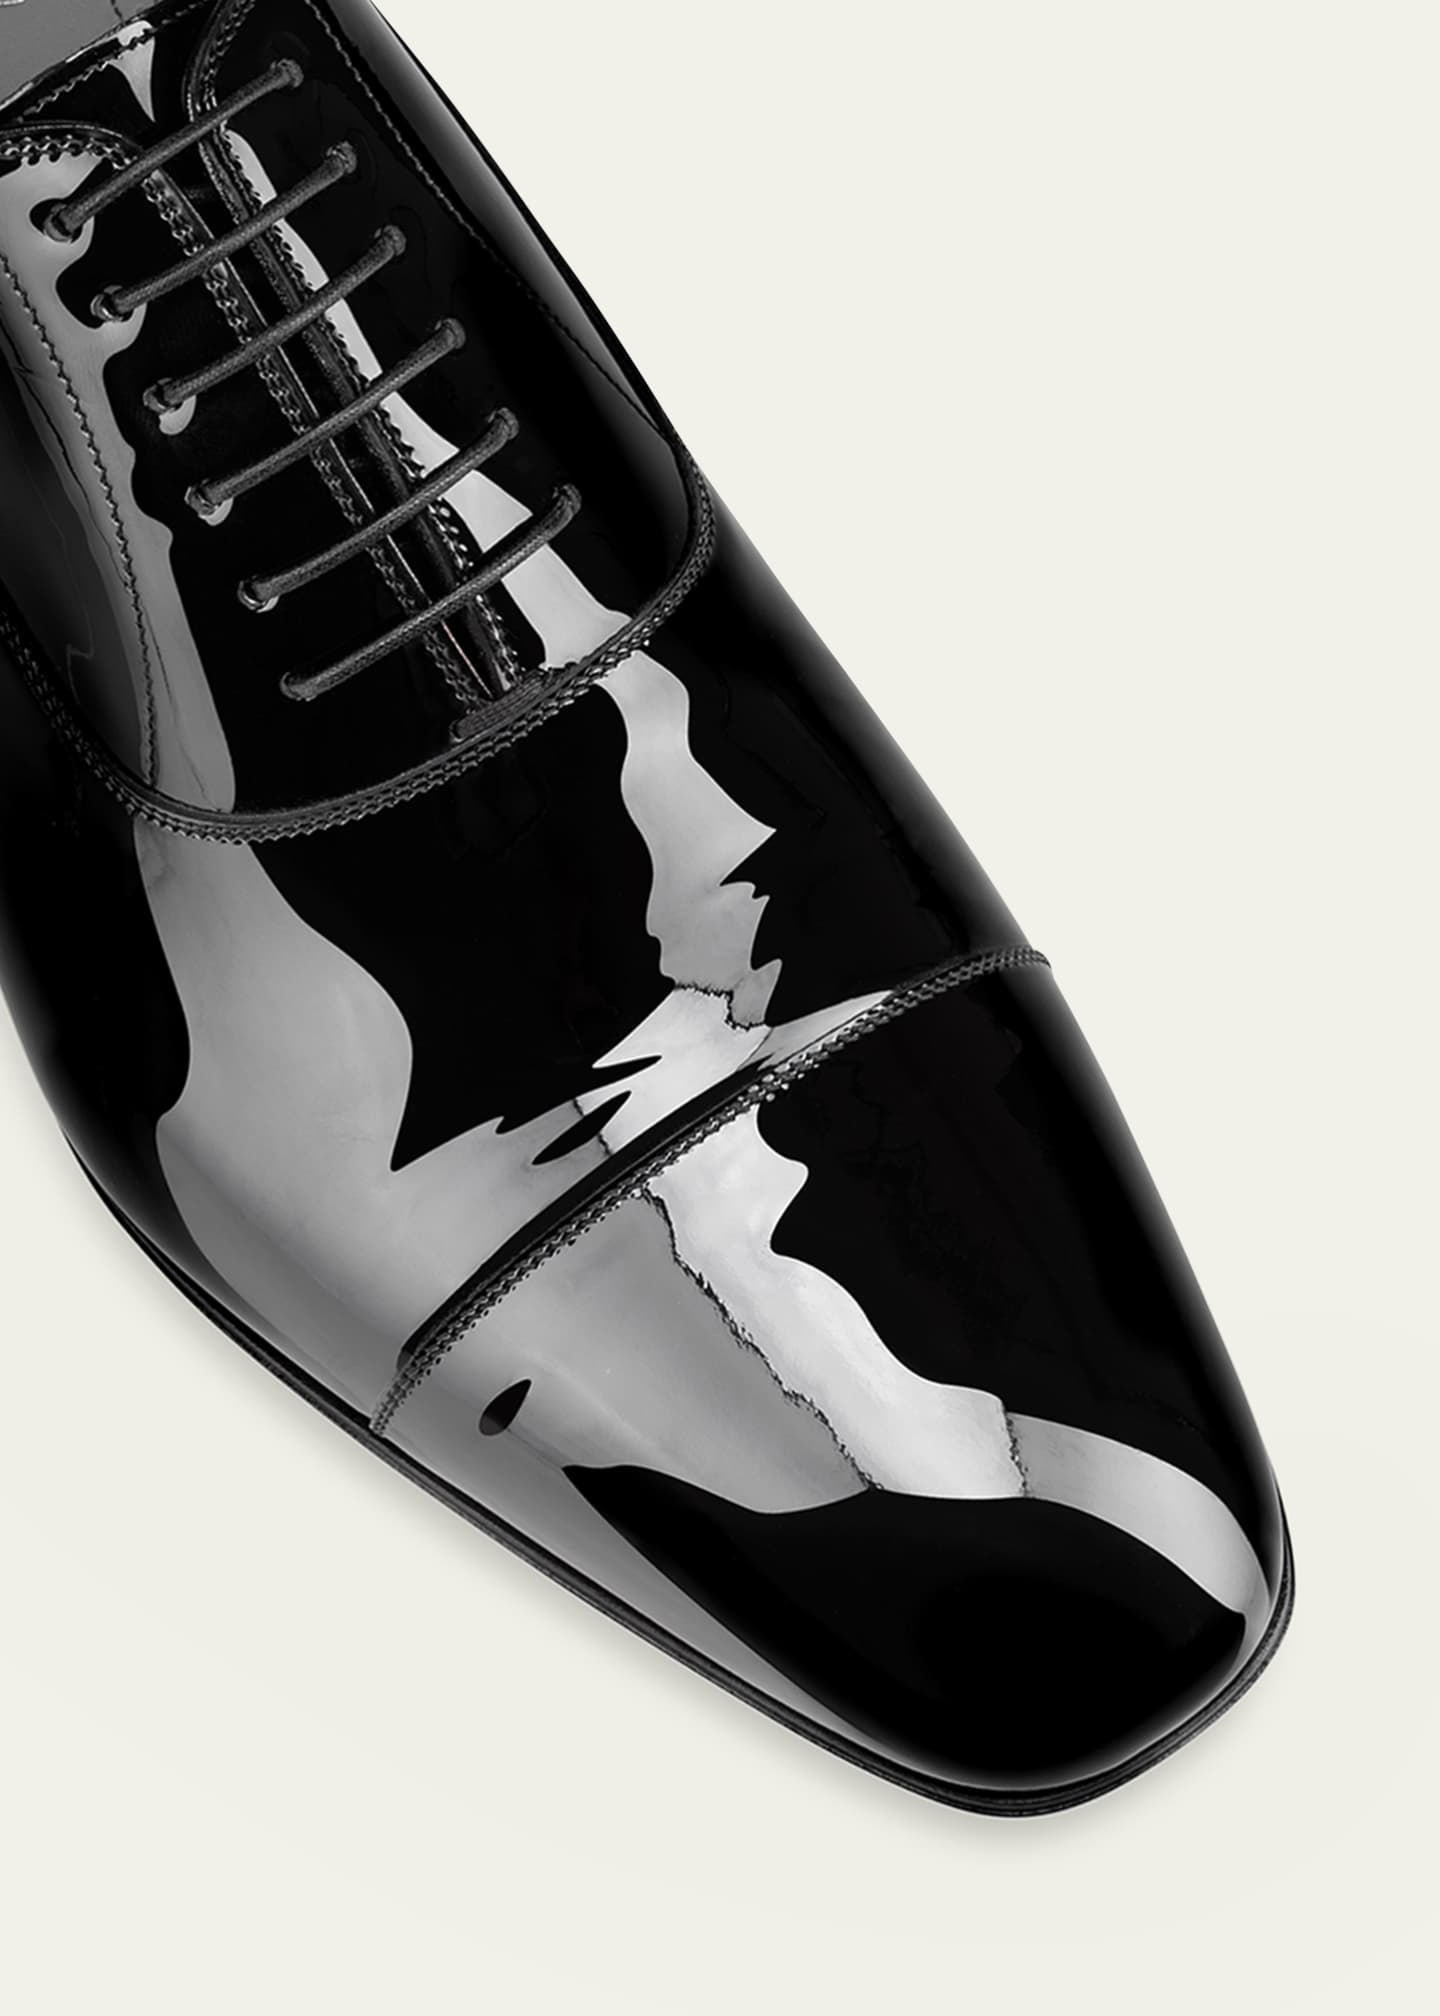 Men's Christian Louboutin Dress Shoes